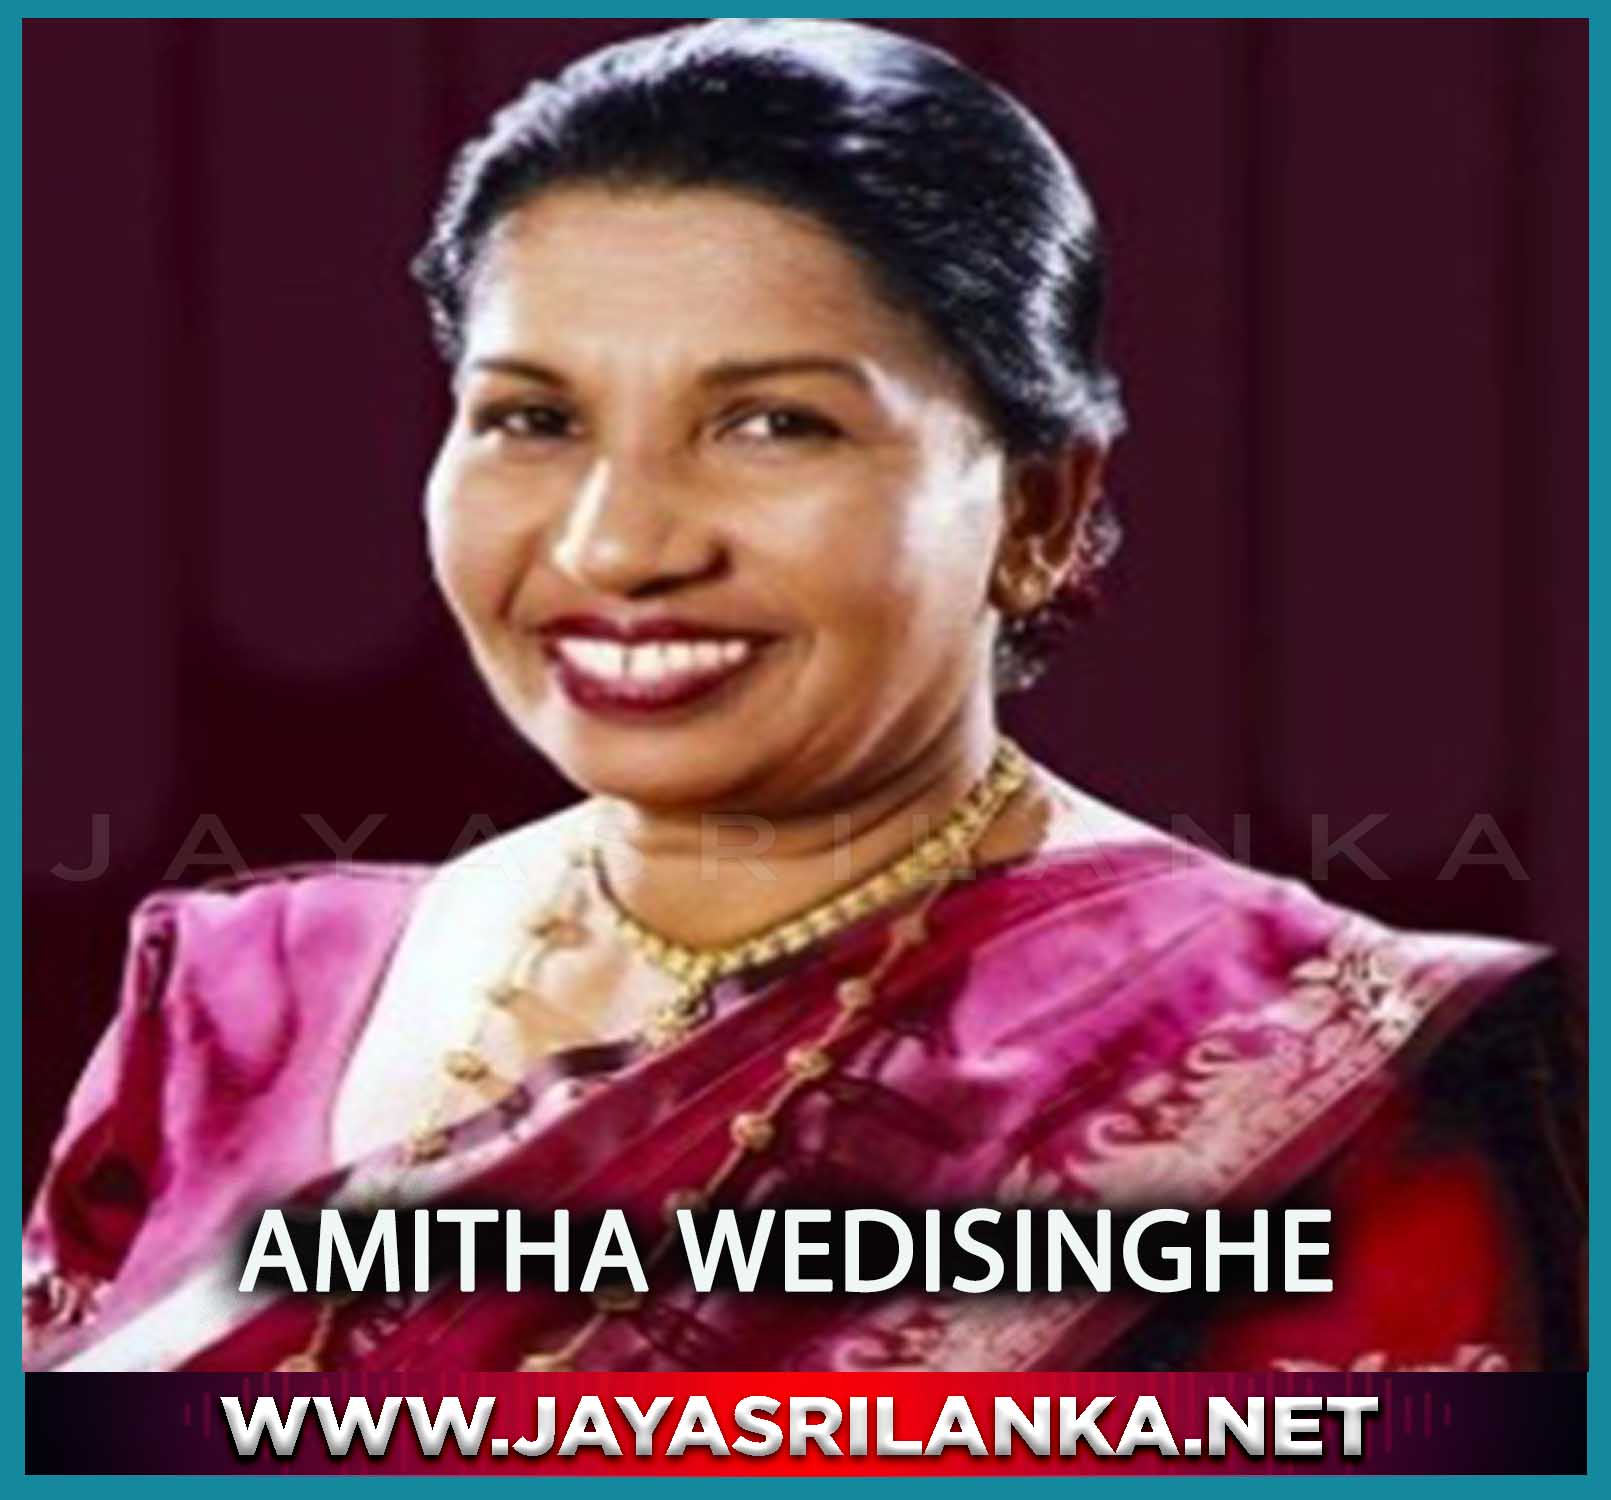 Dedahas Hayasiya Wasarak Gewila - Amitha Wedisinghe mp3 Image